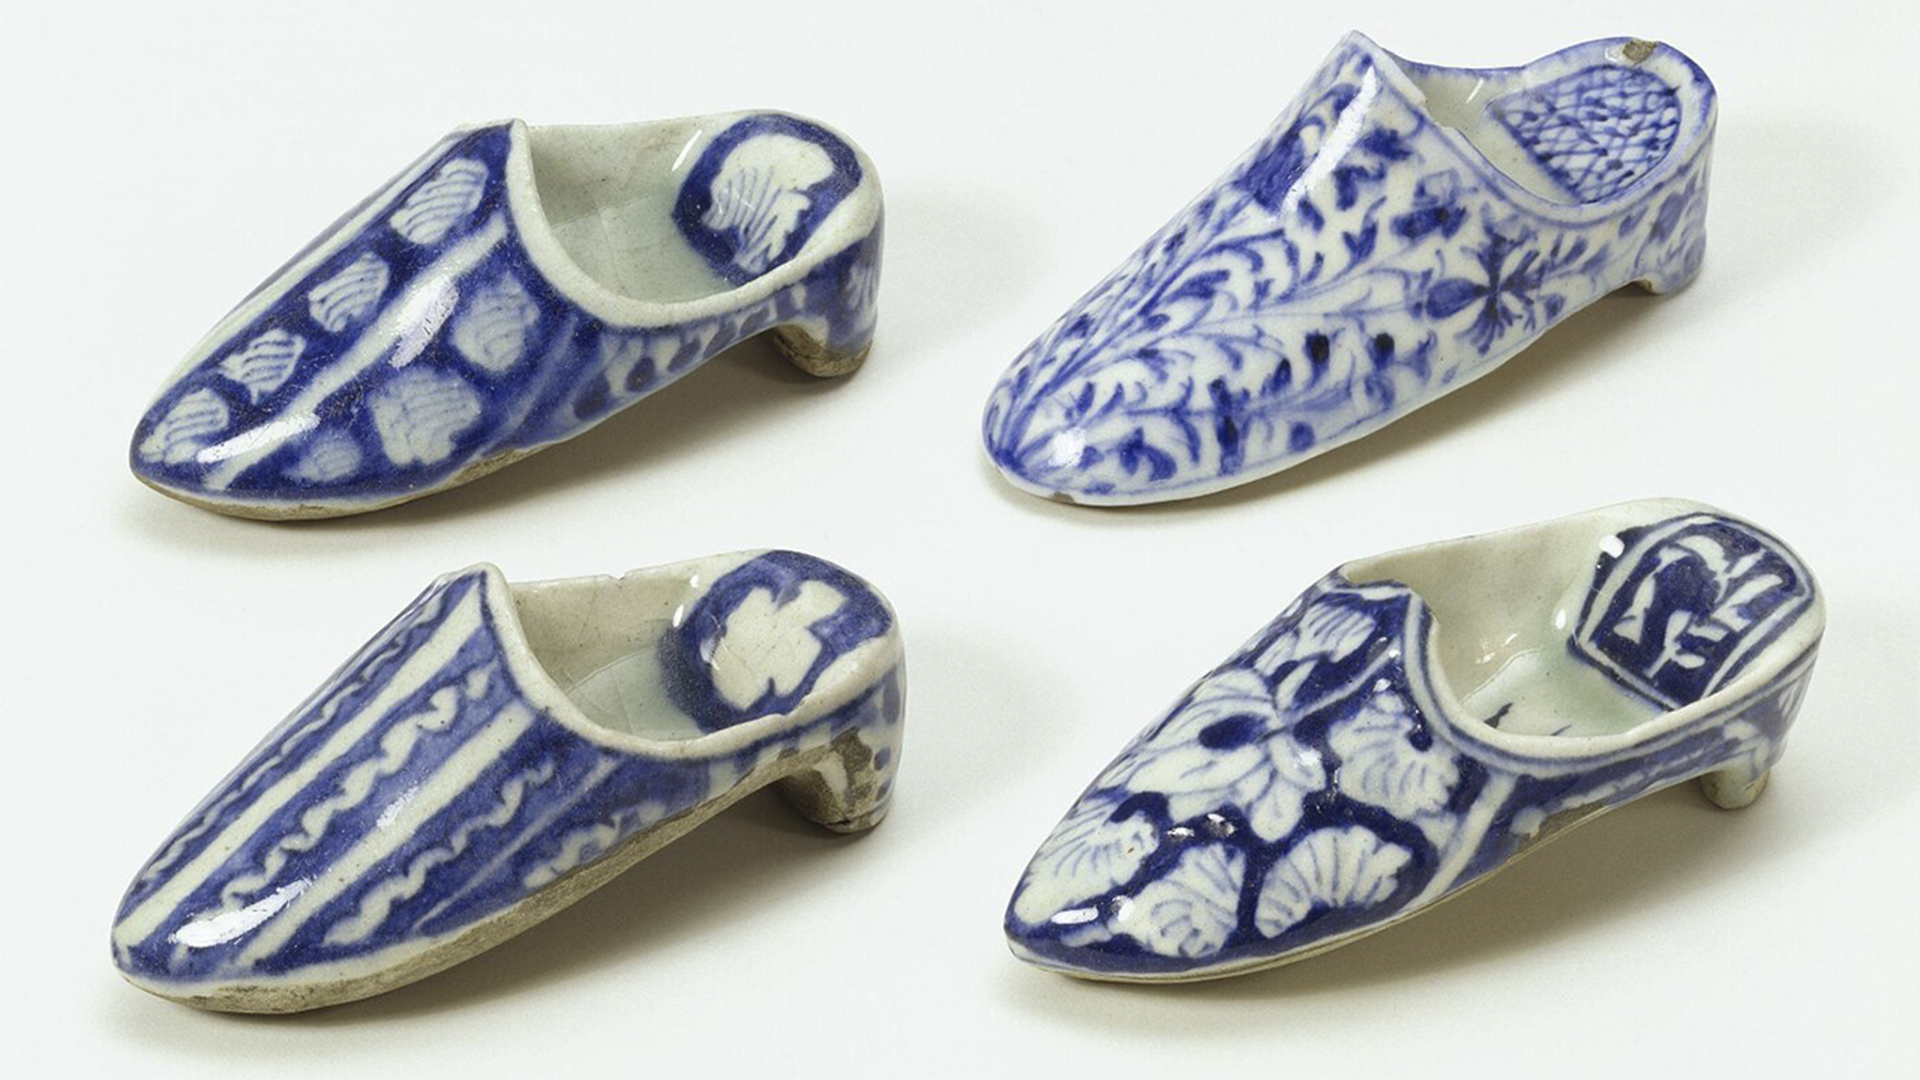 Blue and white ceramic shoe